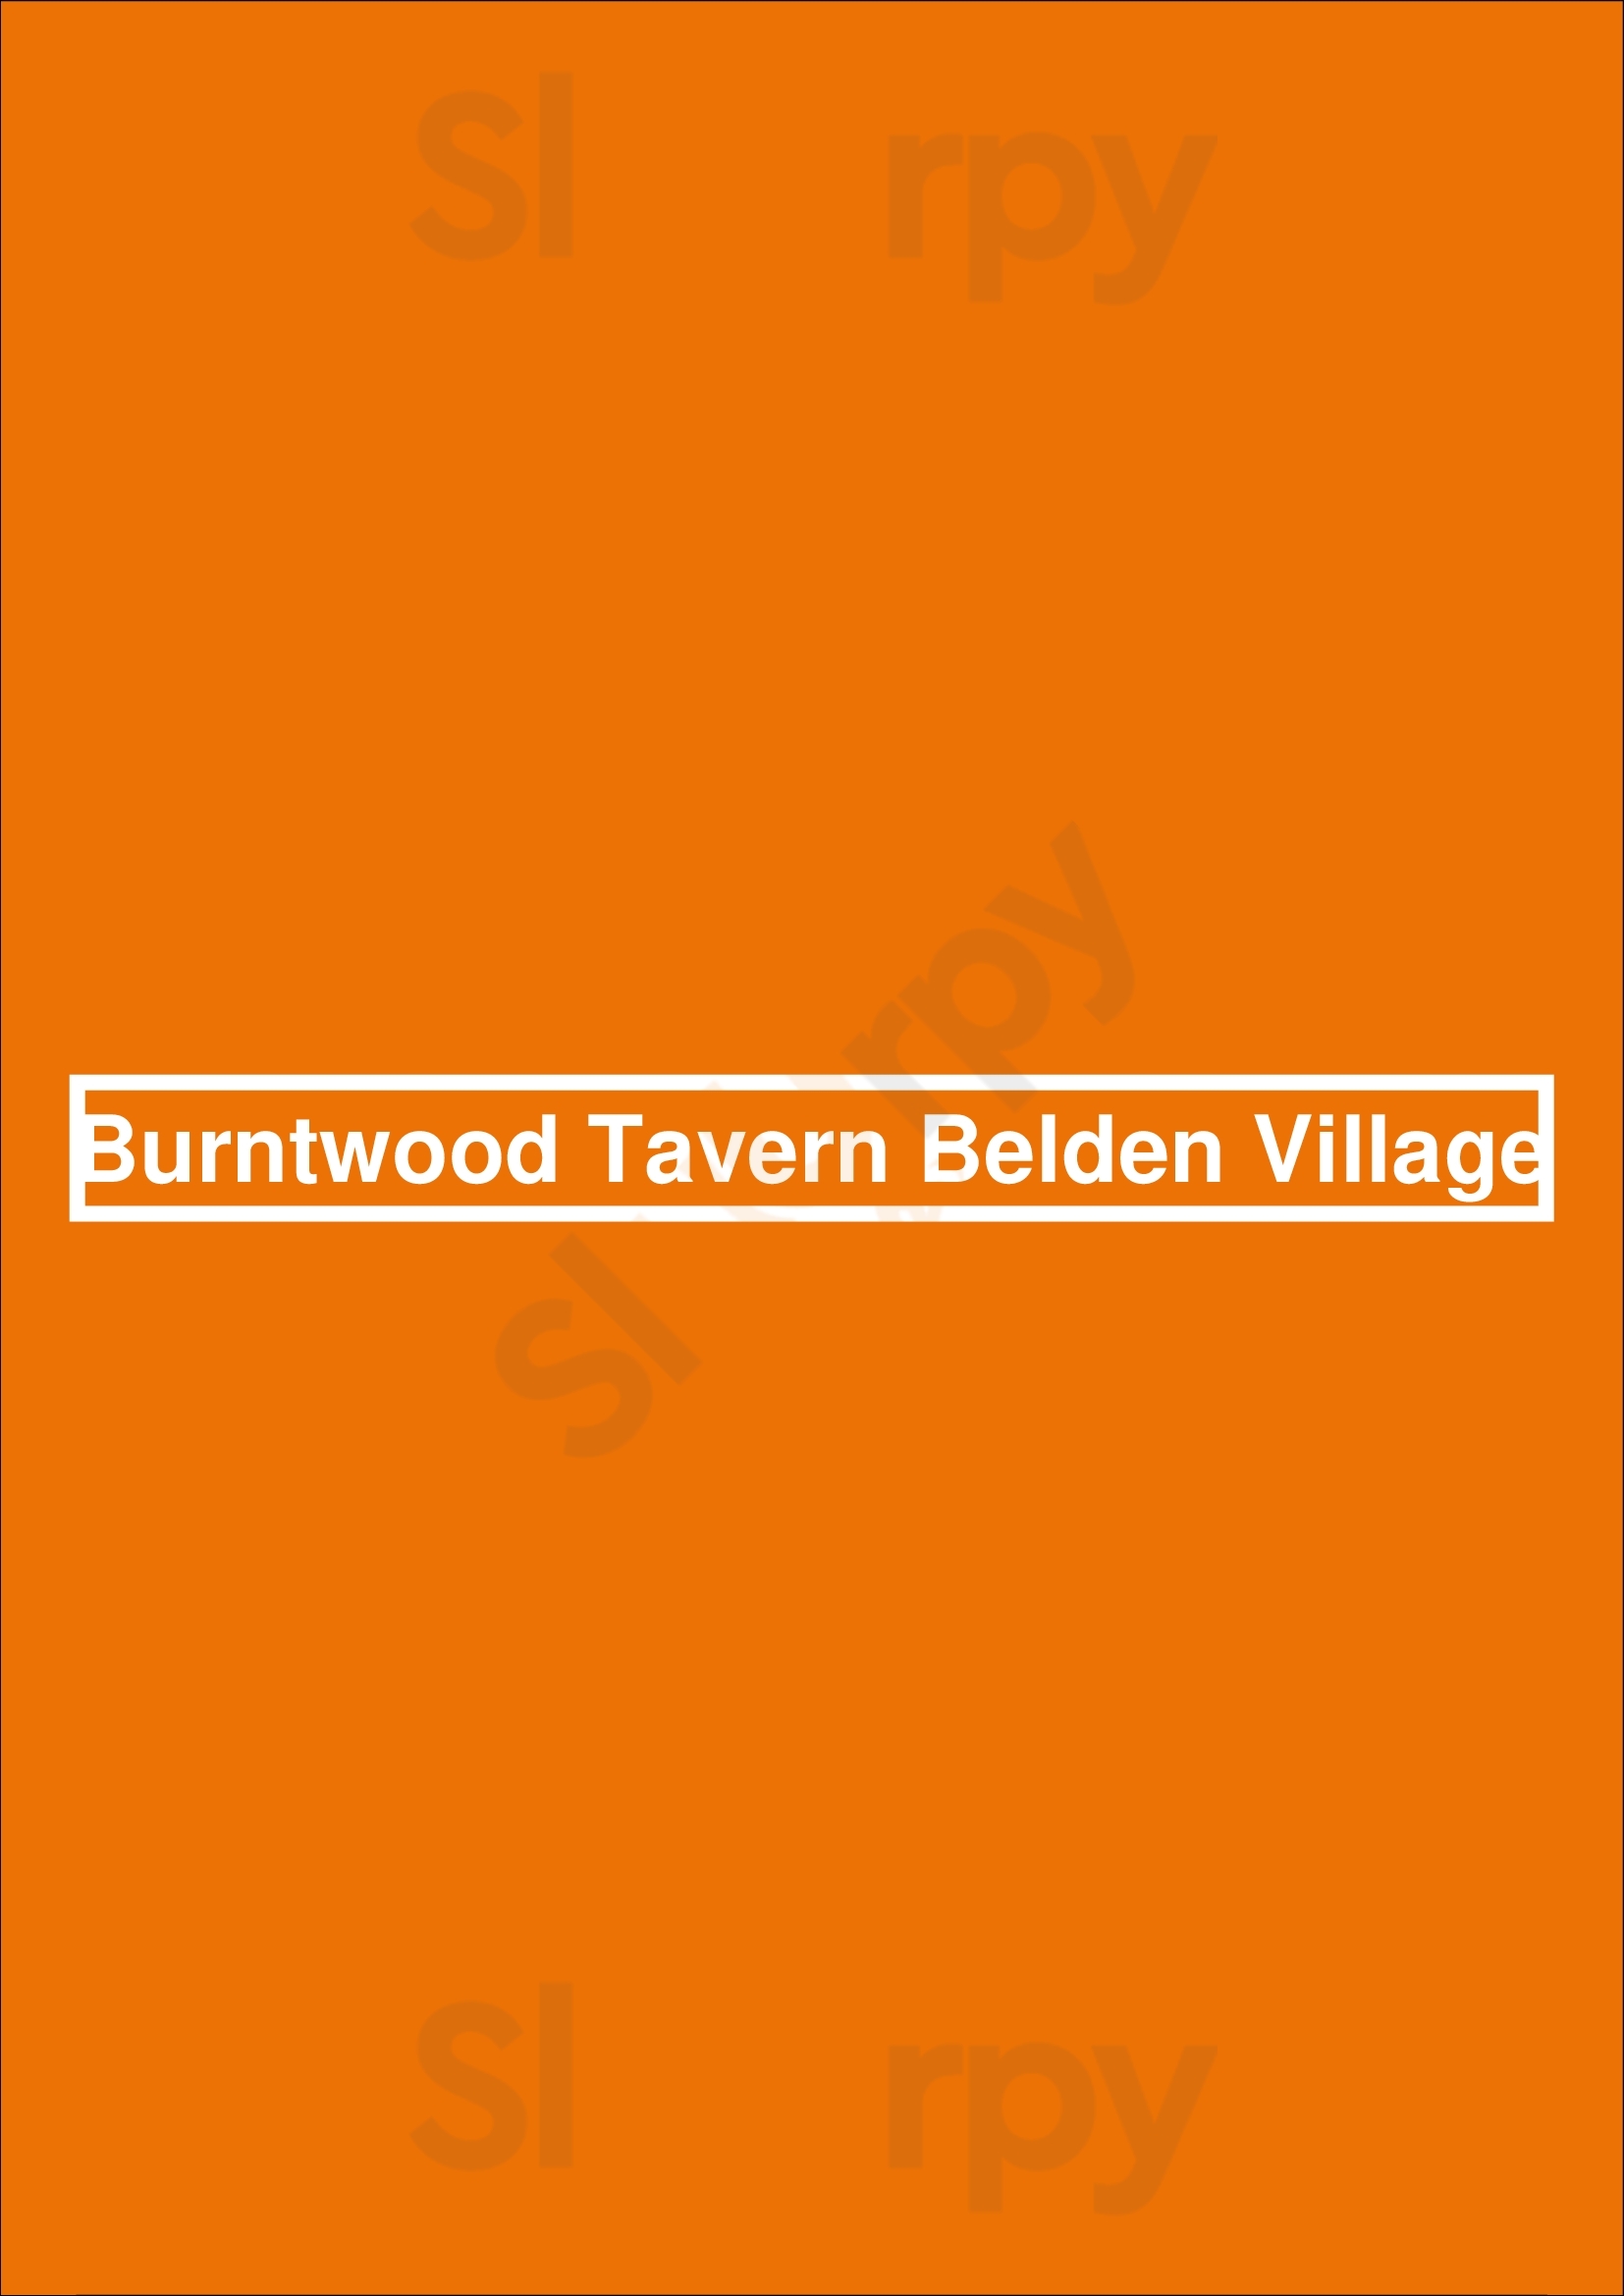 Burntwood Tavern Canton Menu - 1